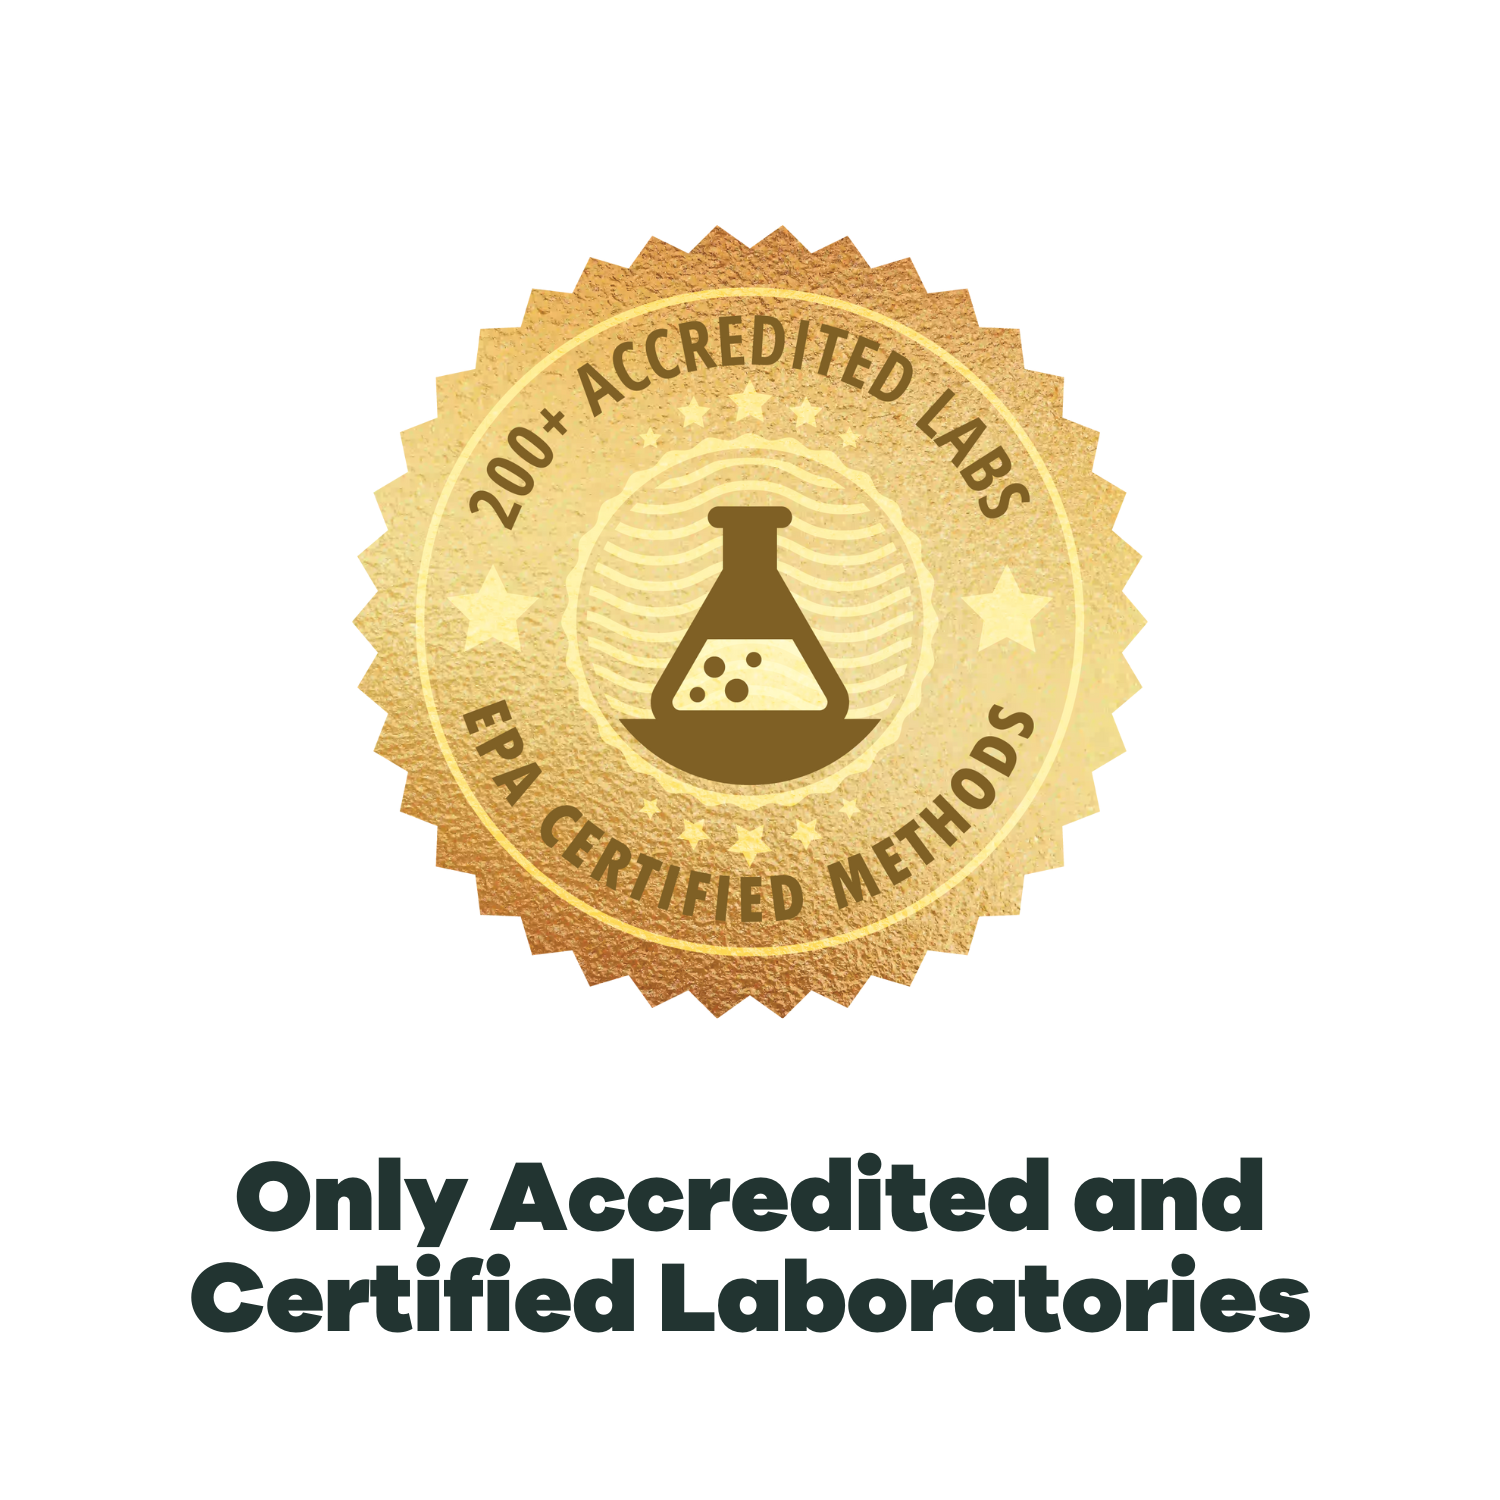 Certified laboratories